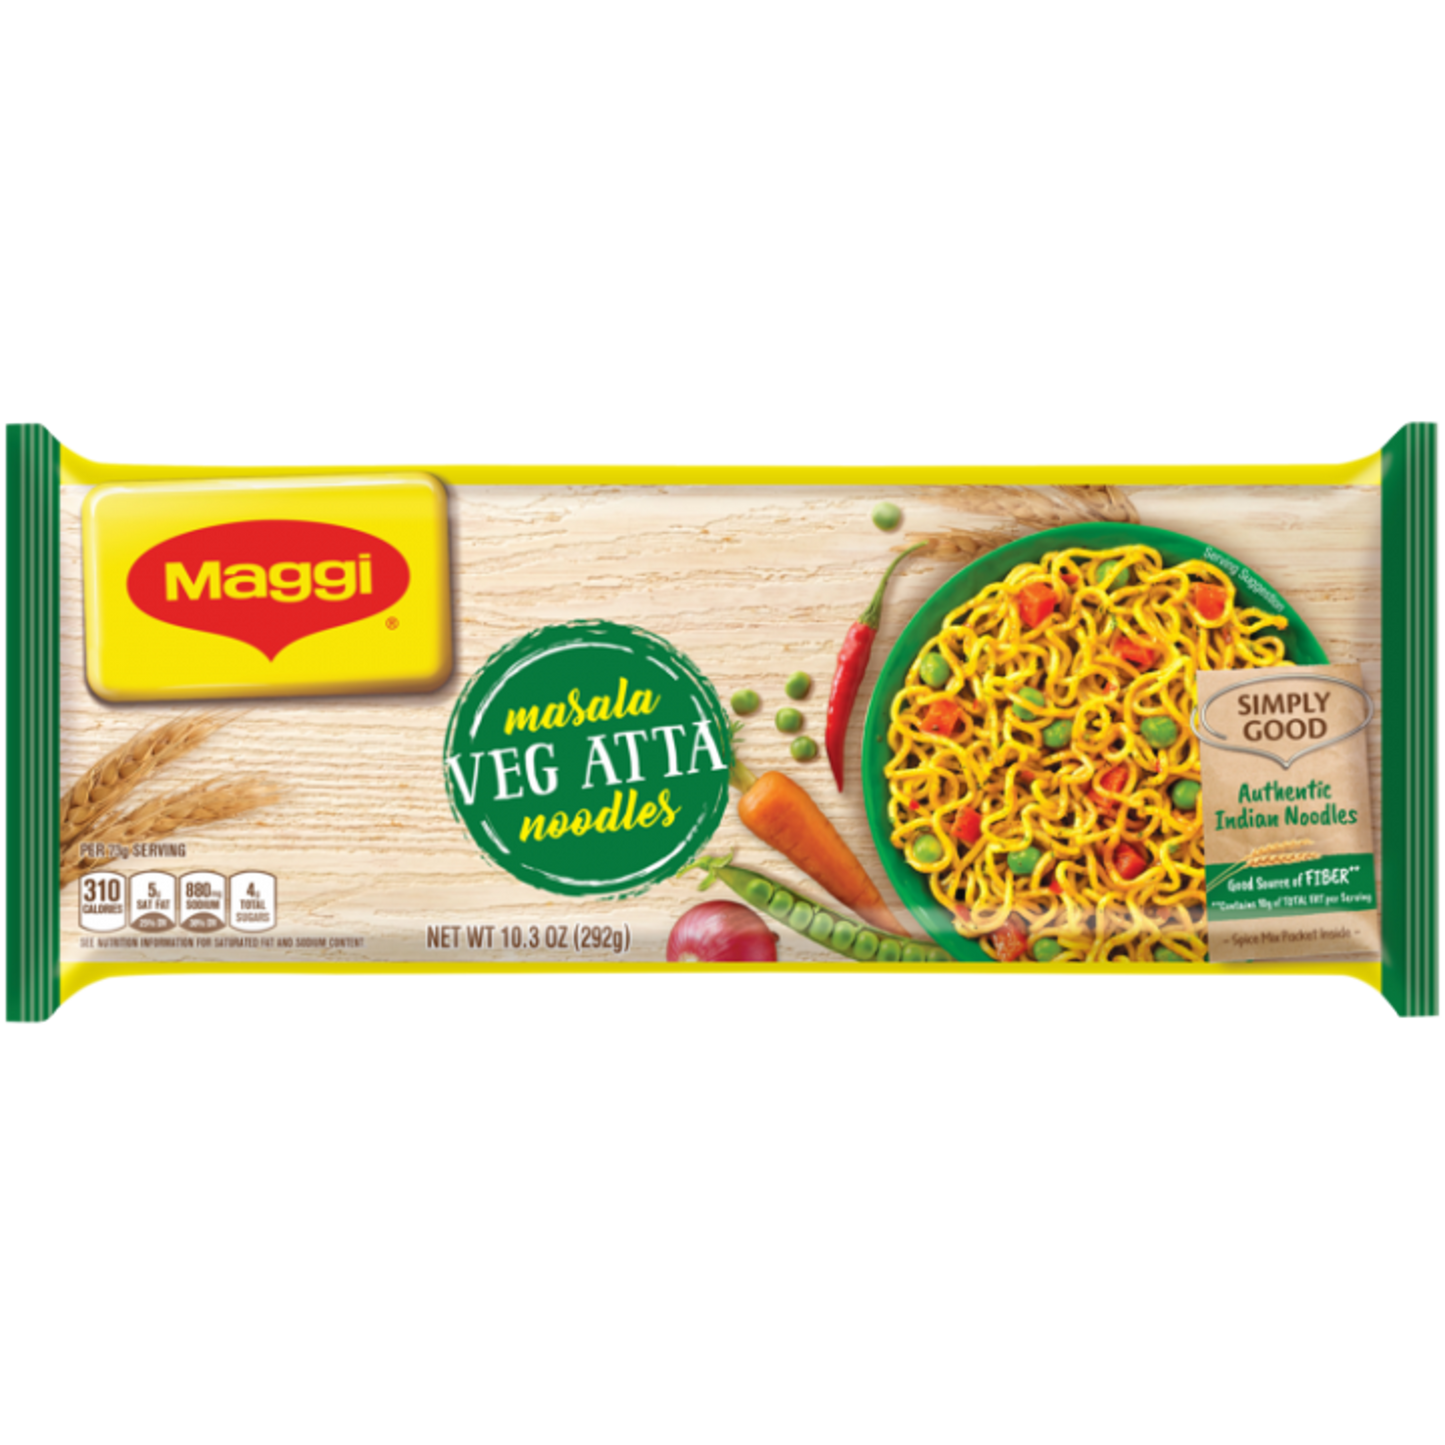 Masala Veg Atta Noodles